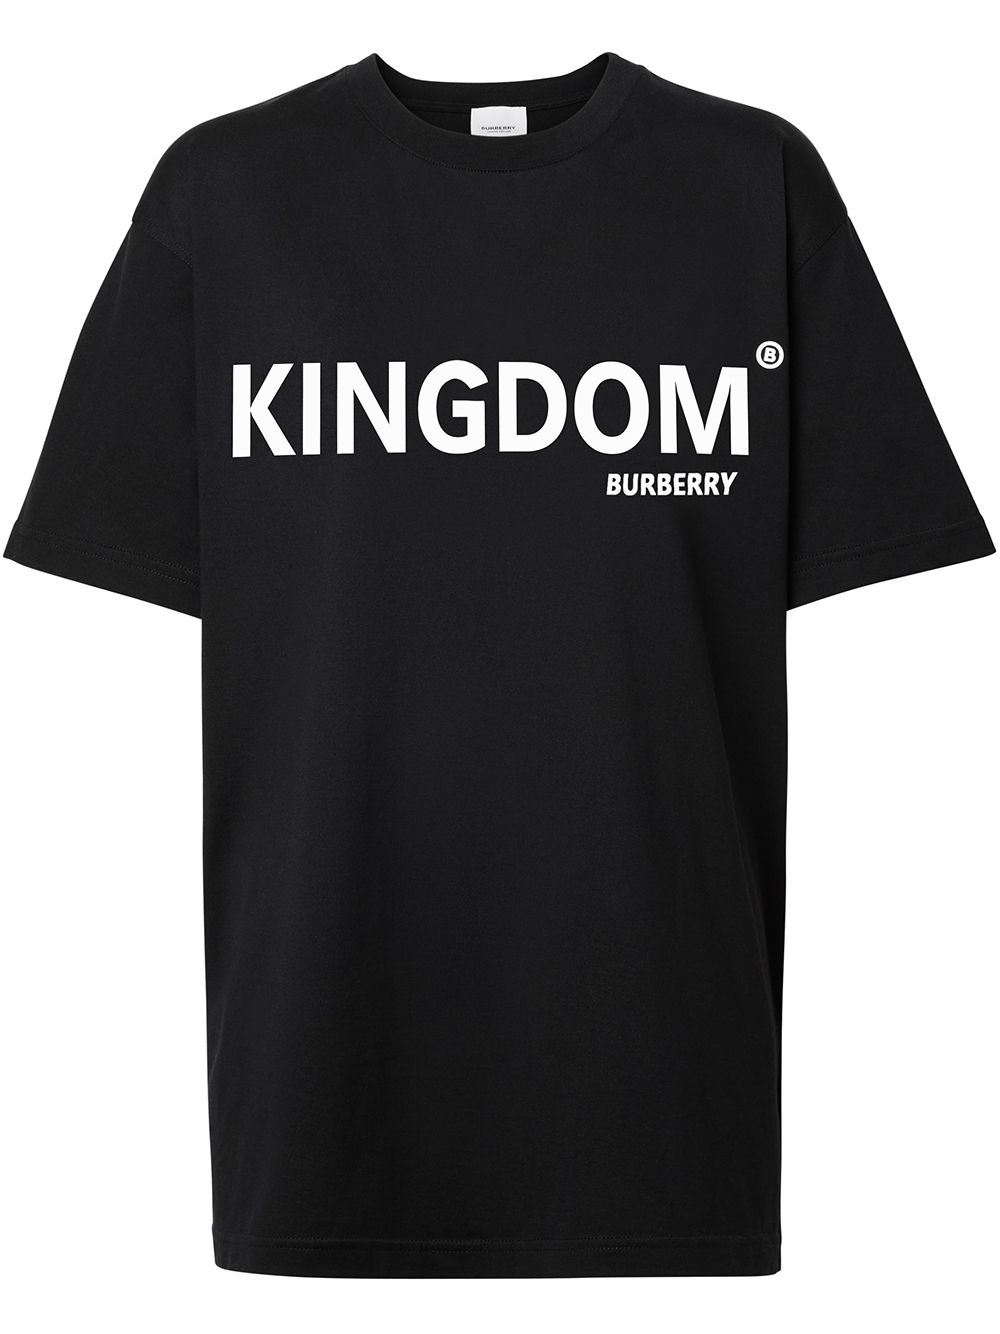 Burberry Kingdom Print T-Shirt 